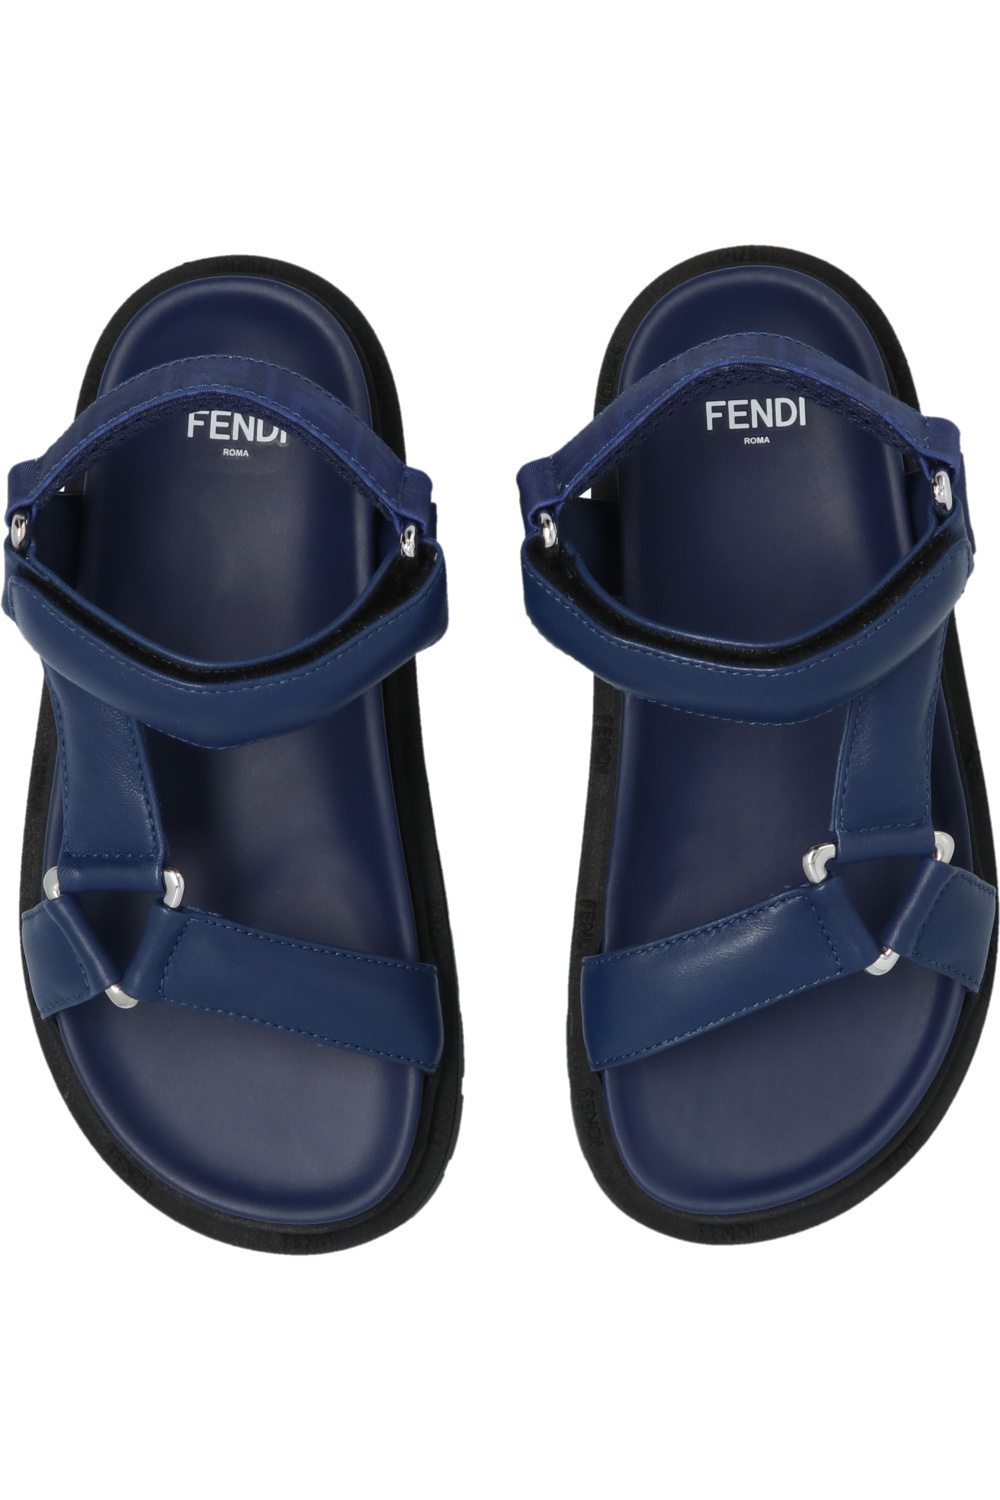 Fendi Kids fendi black leather boots